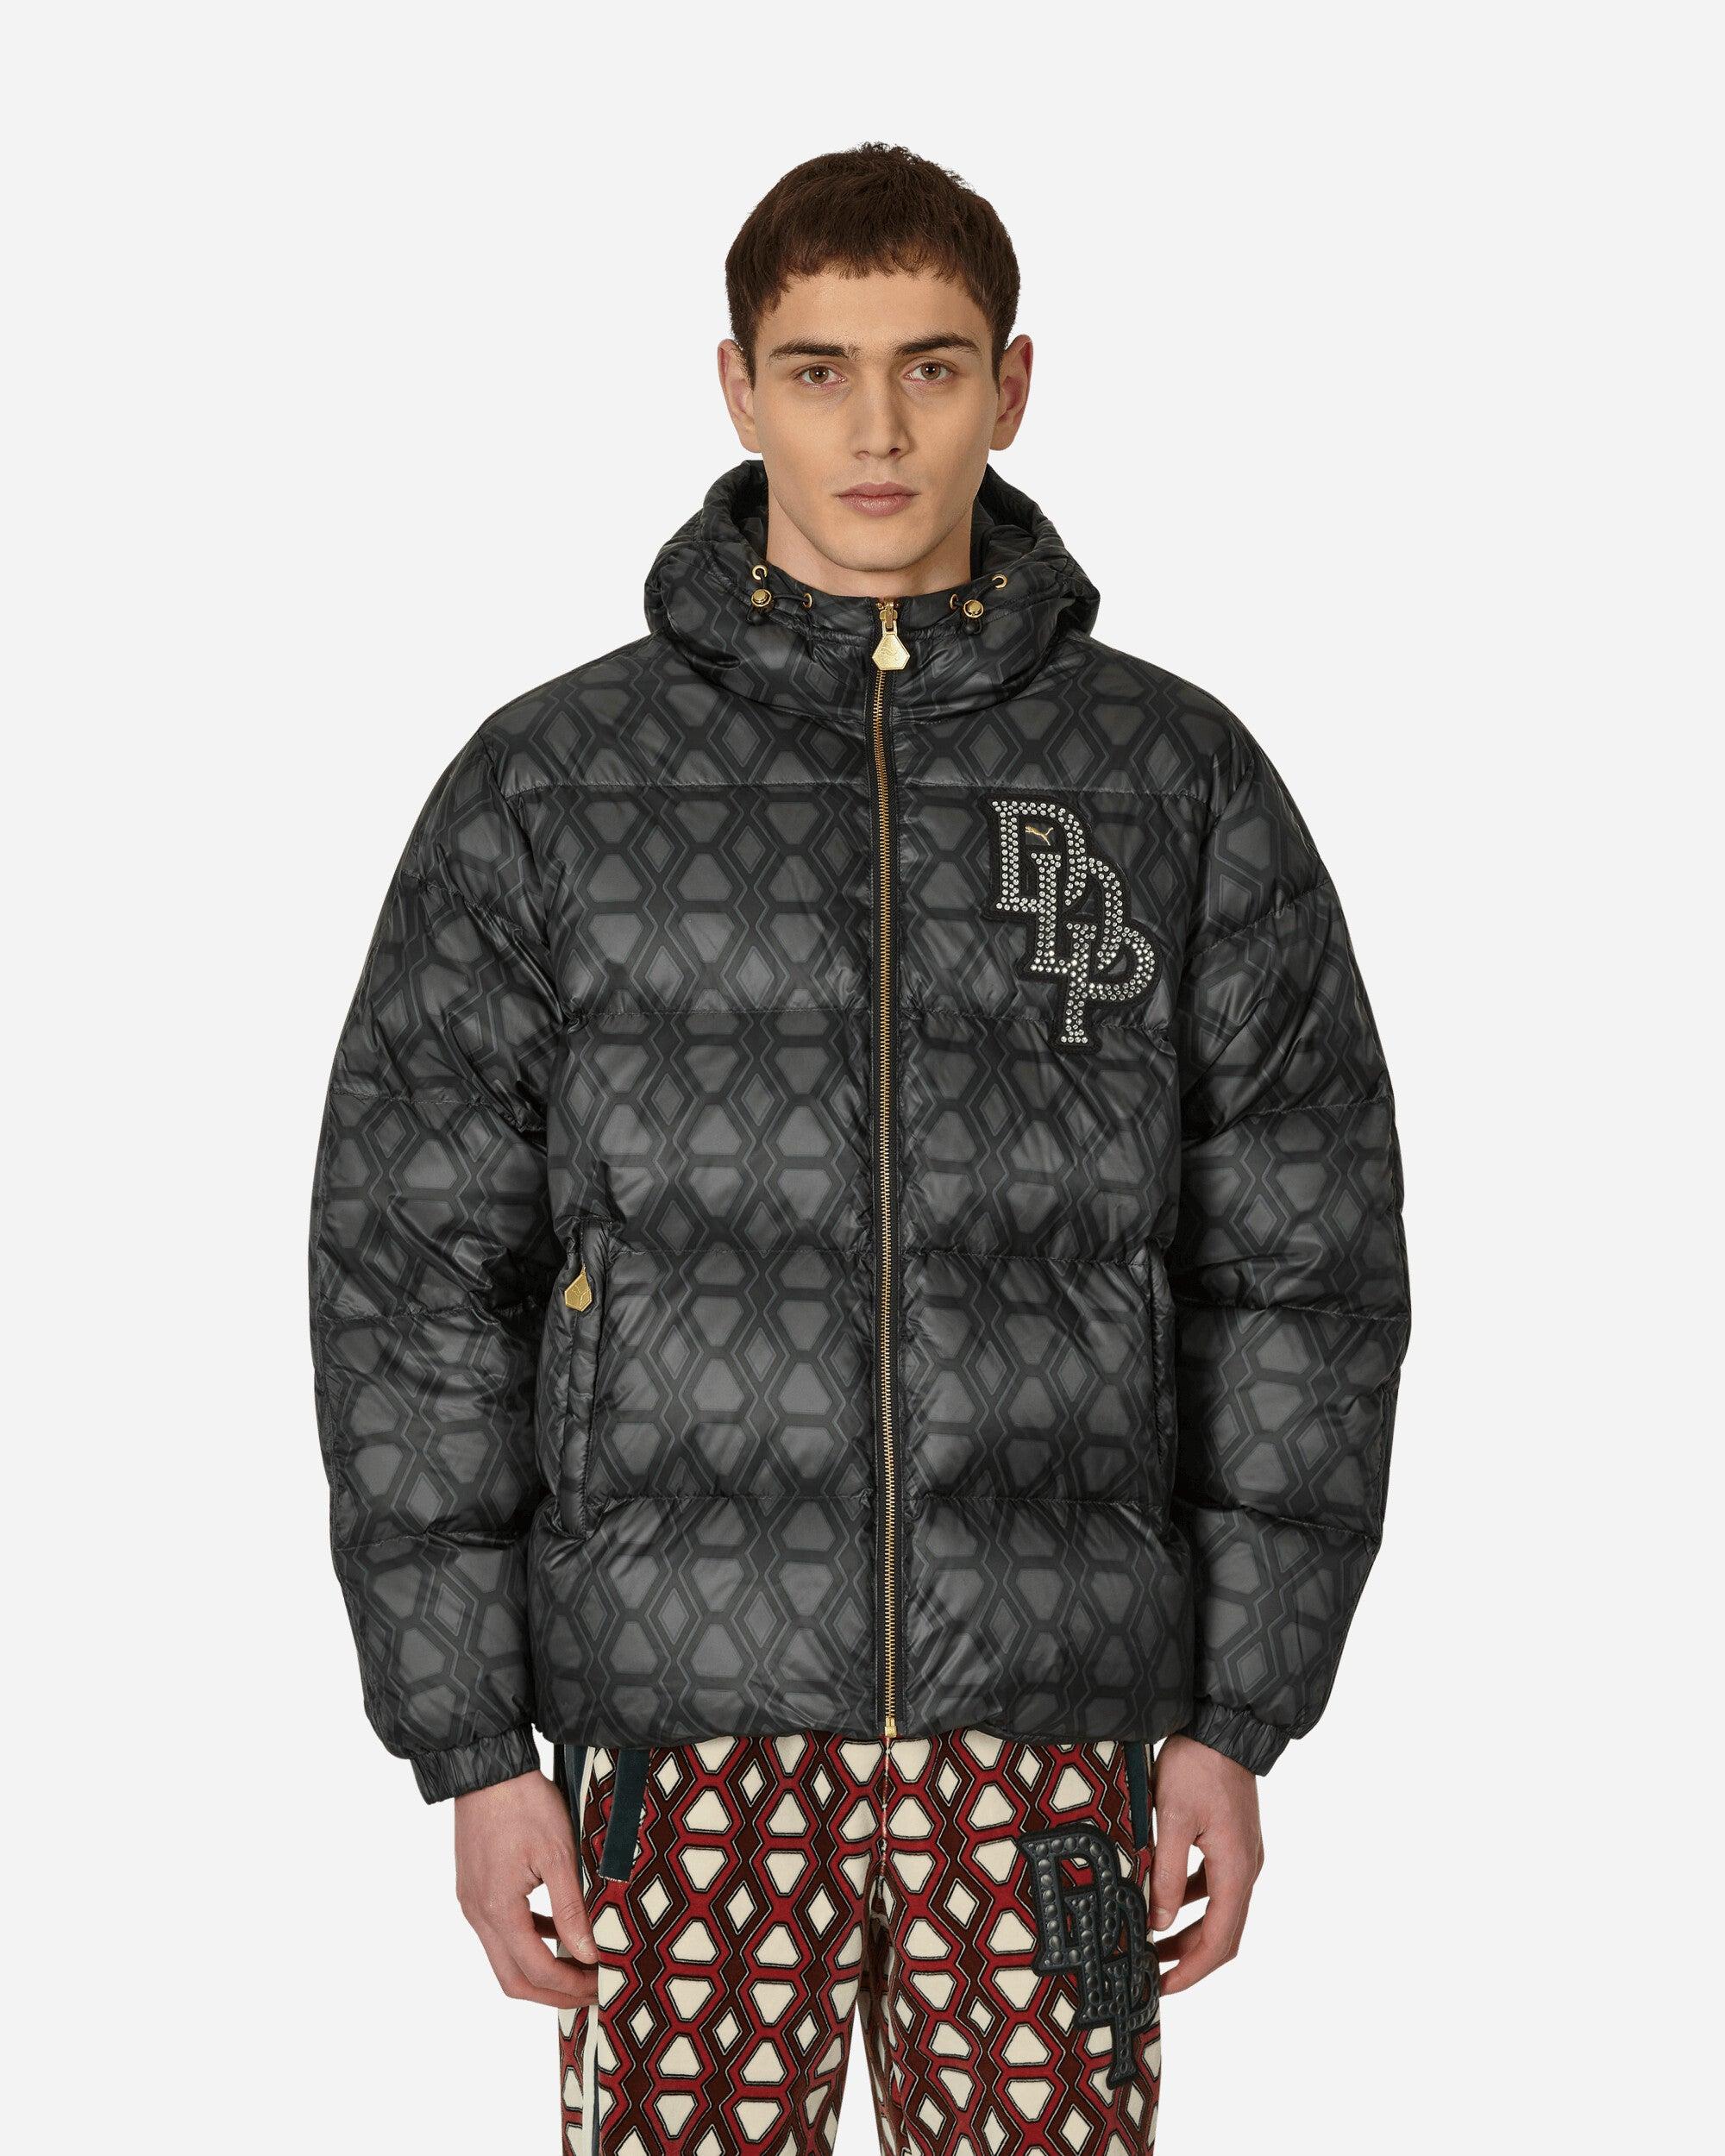 Authentic Louis Vuitton jacket Dapper Dan Inspired